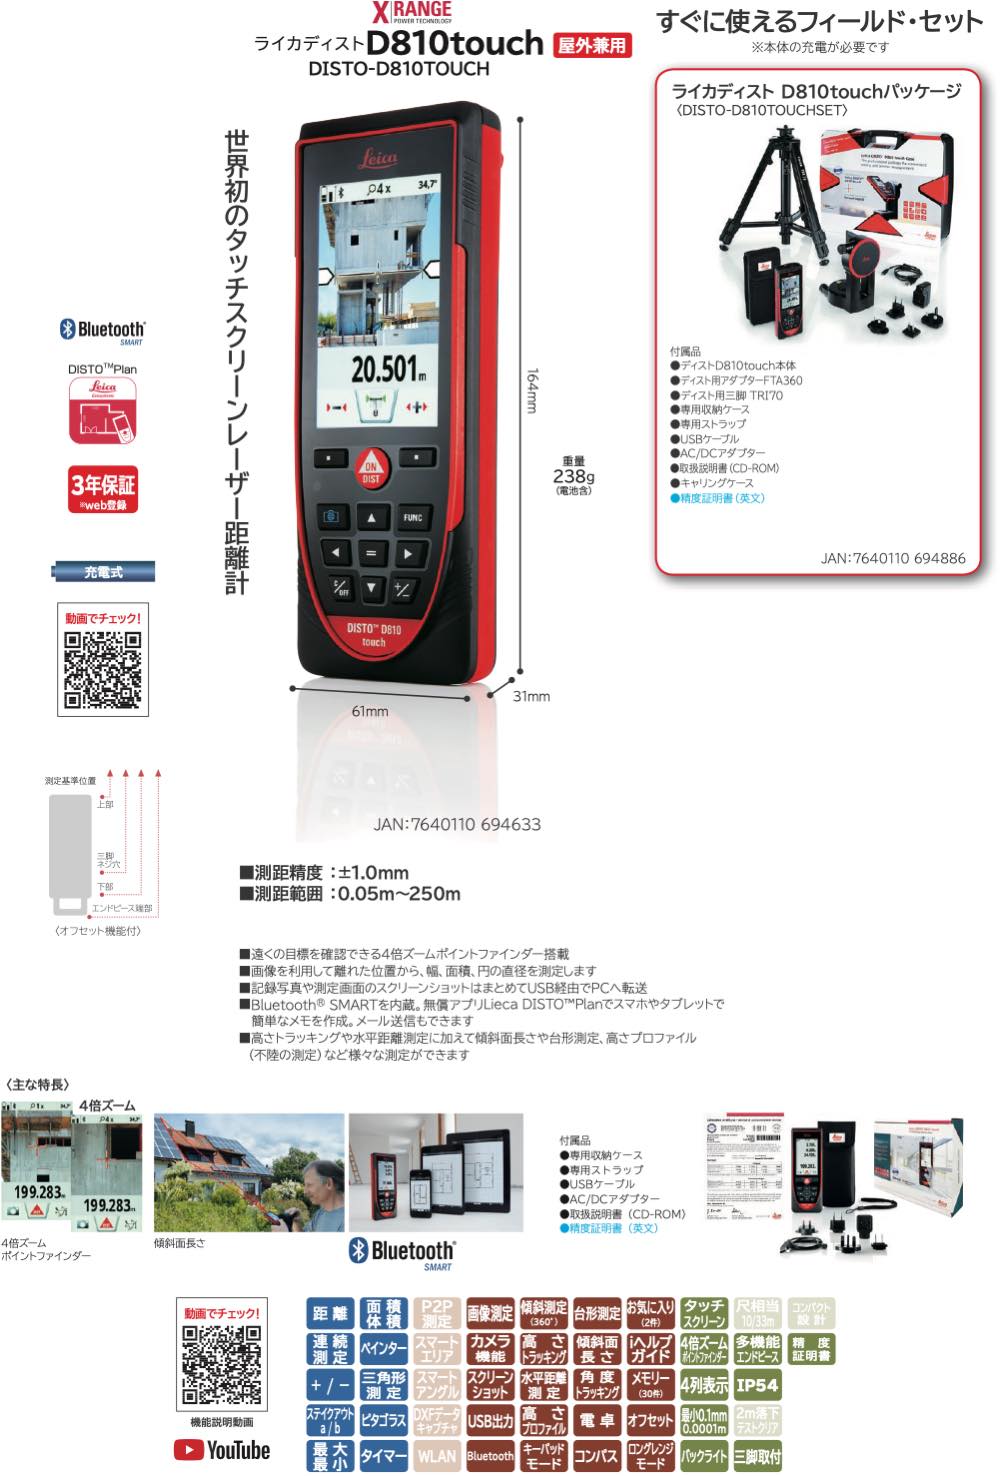 TaJIma(タジマツール)【ライカディストD810 touch レーザー距離計 